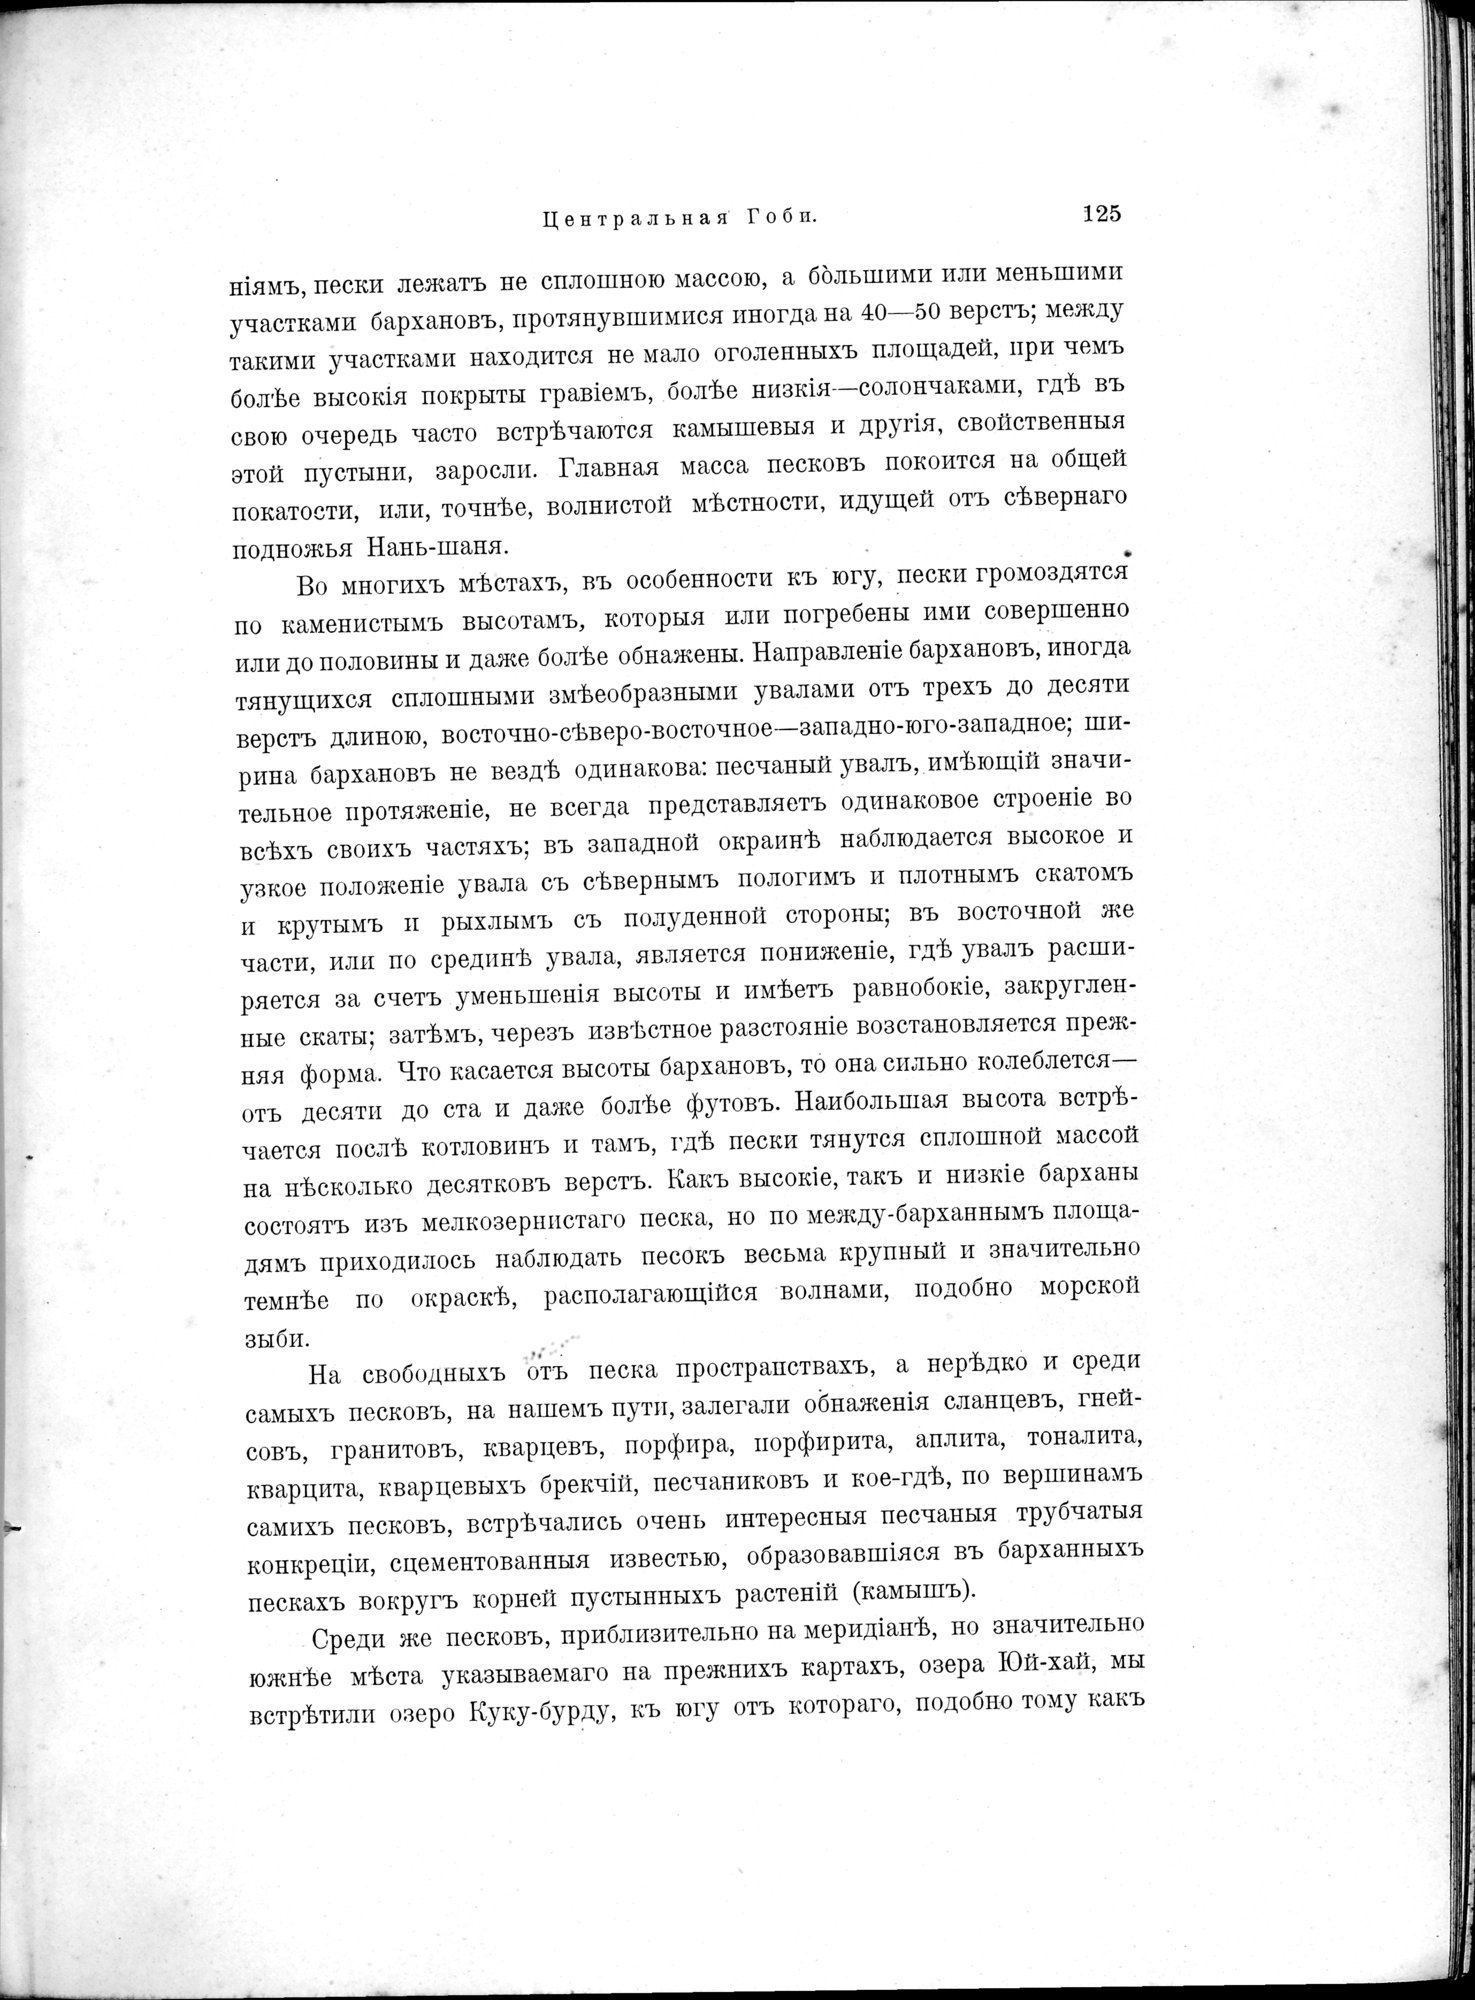 Mongoliia i Kam : vol.1 / 159 ページ（白黒高解像度画像）